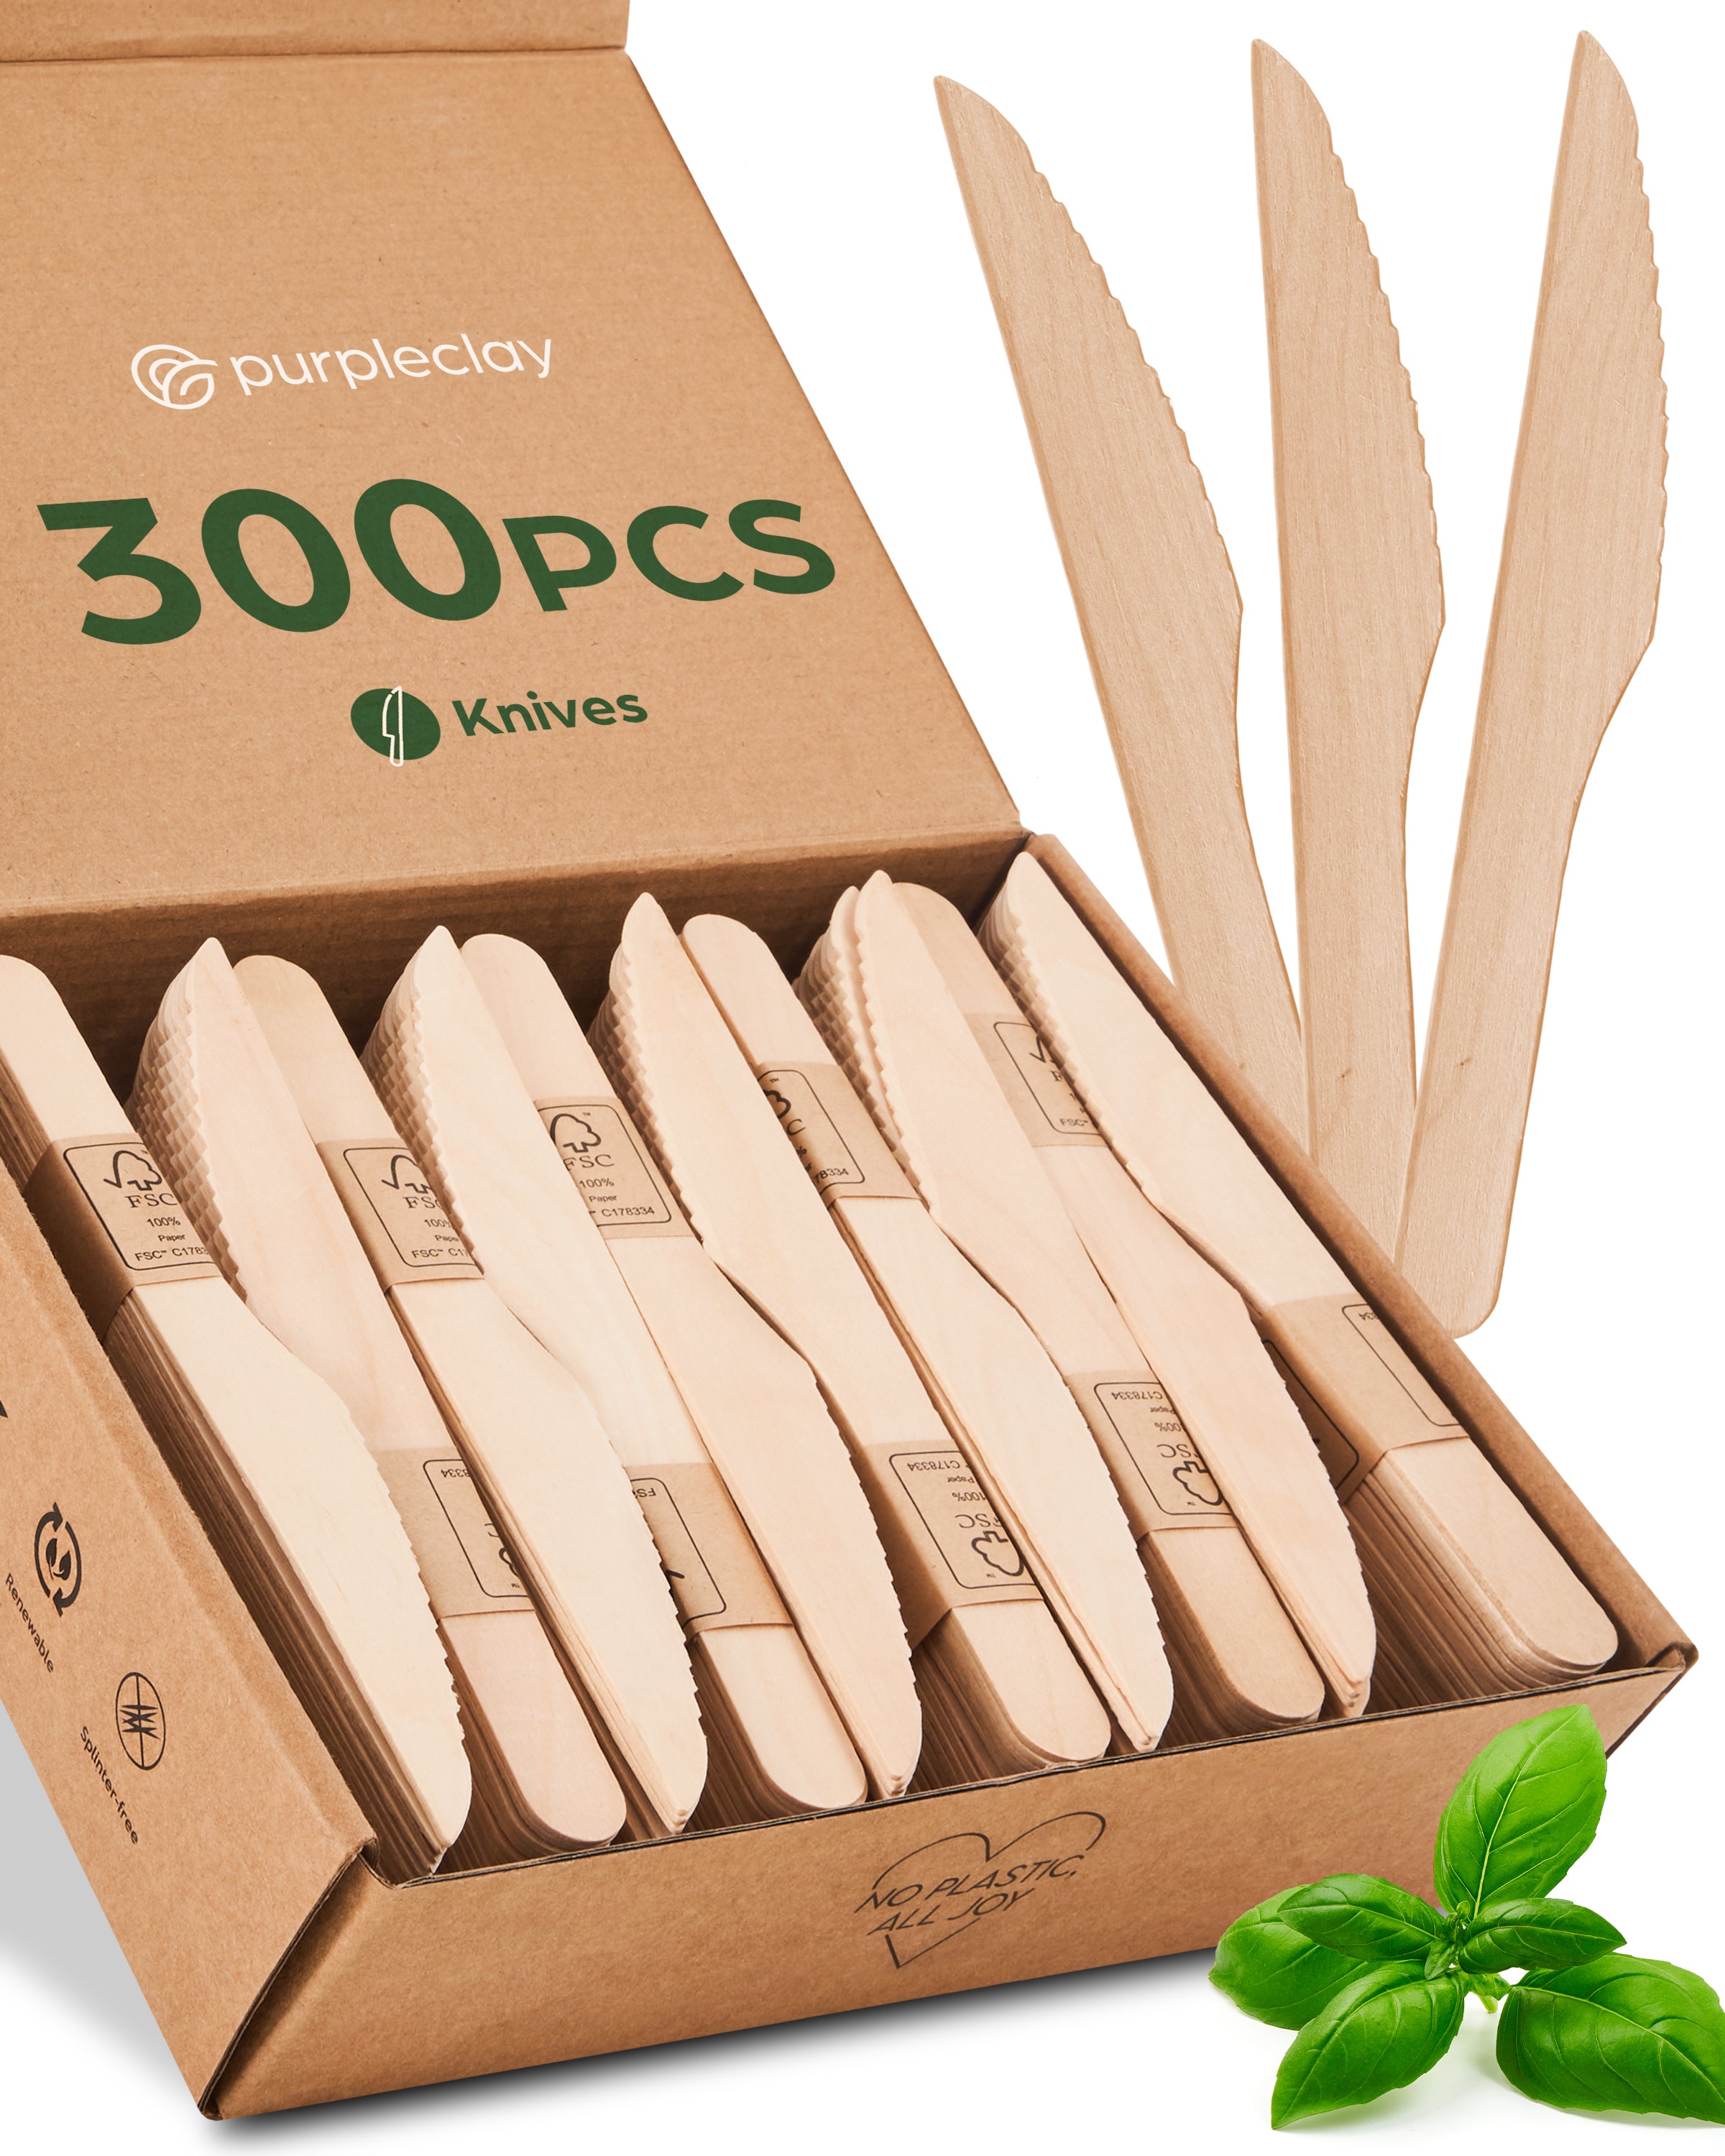 Wooden Knives 300 PCS - Purpleclay